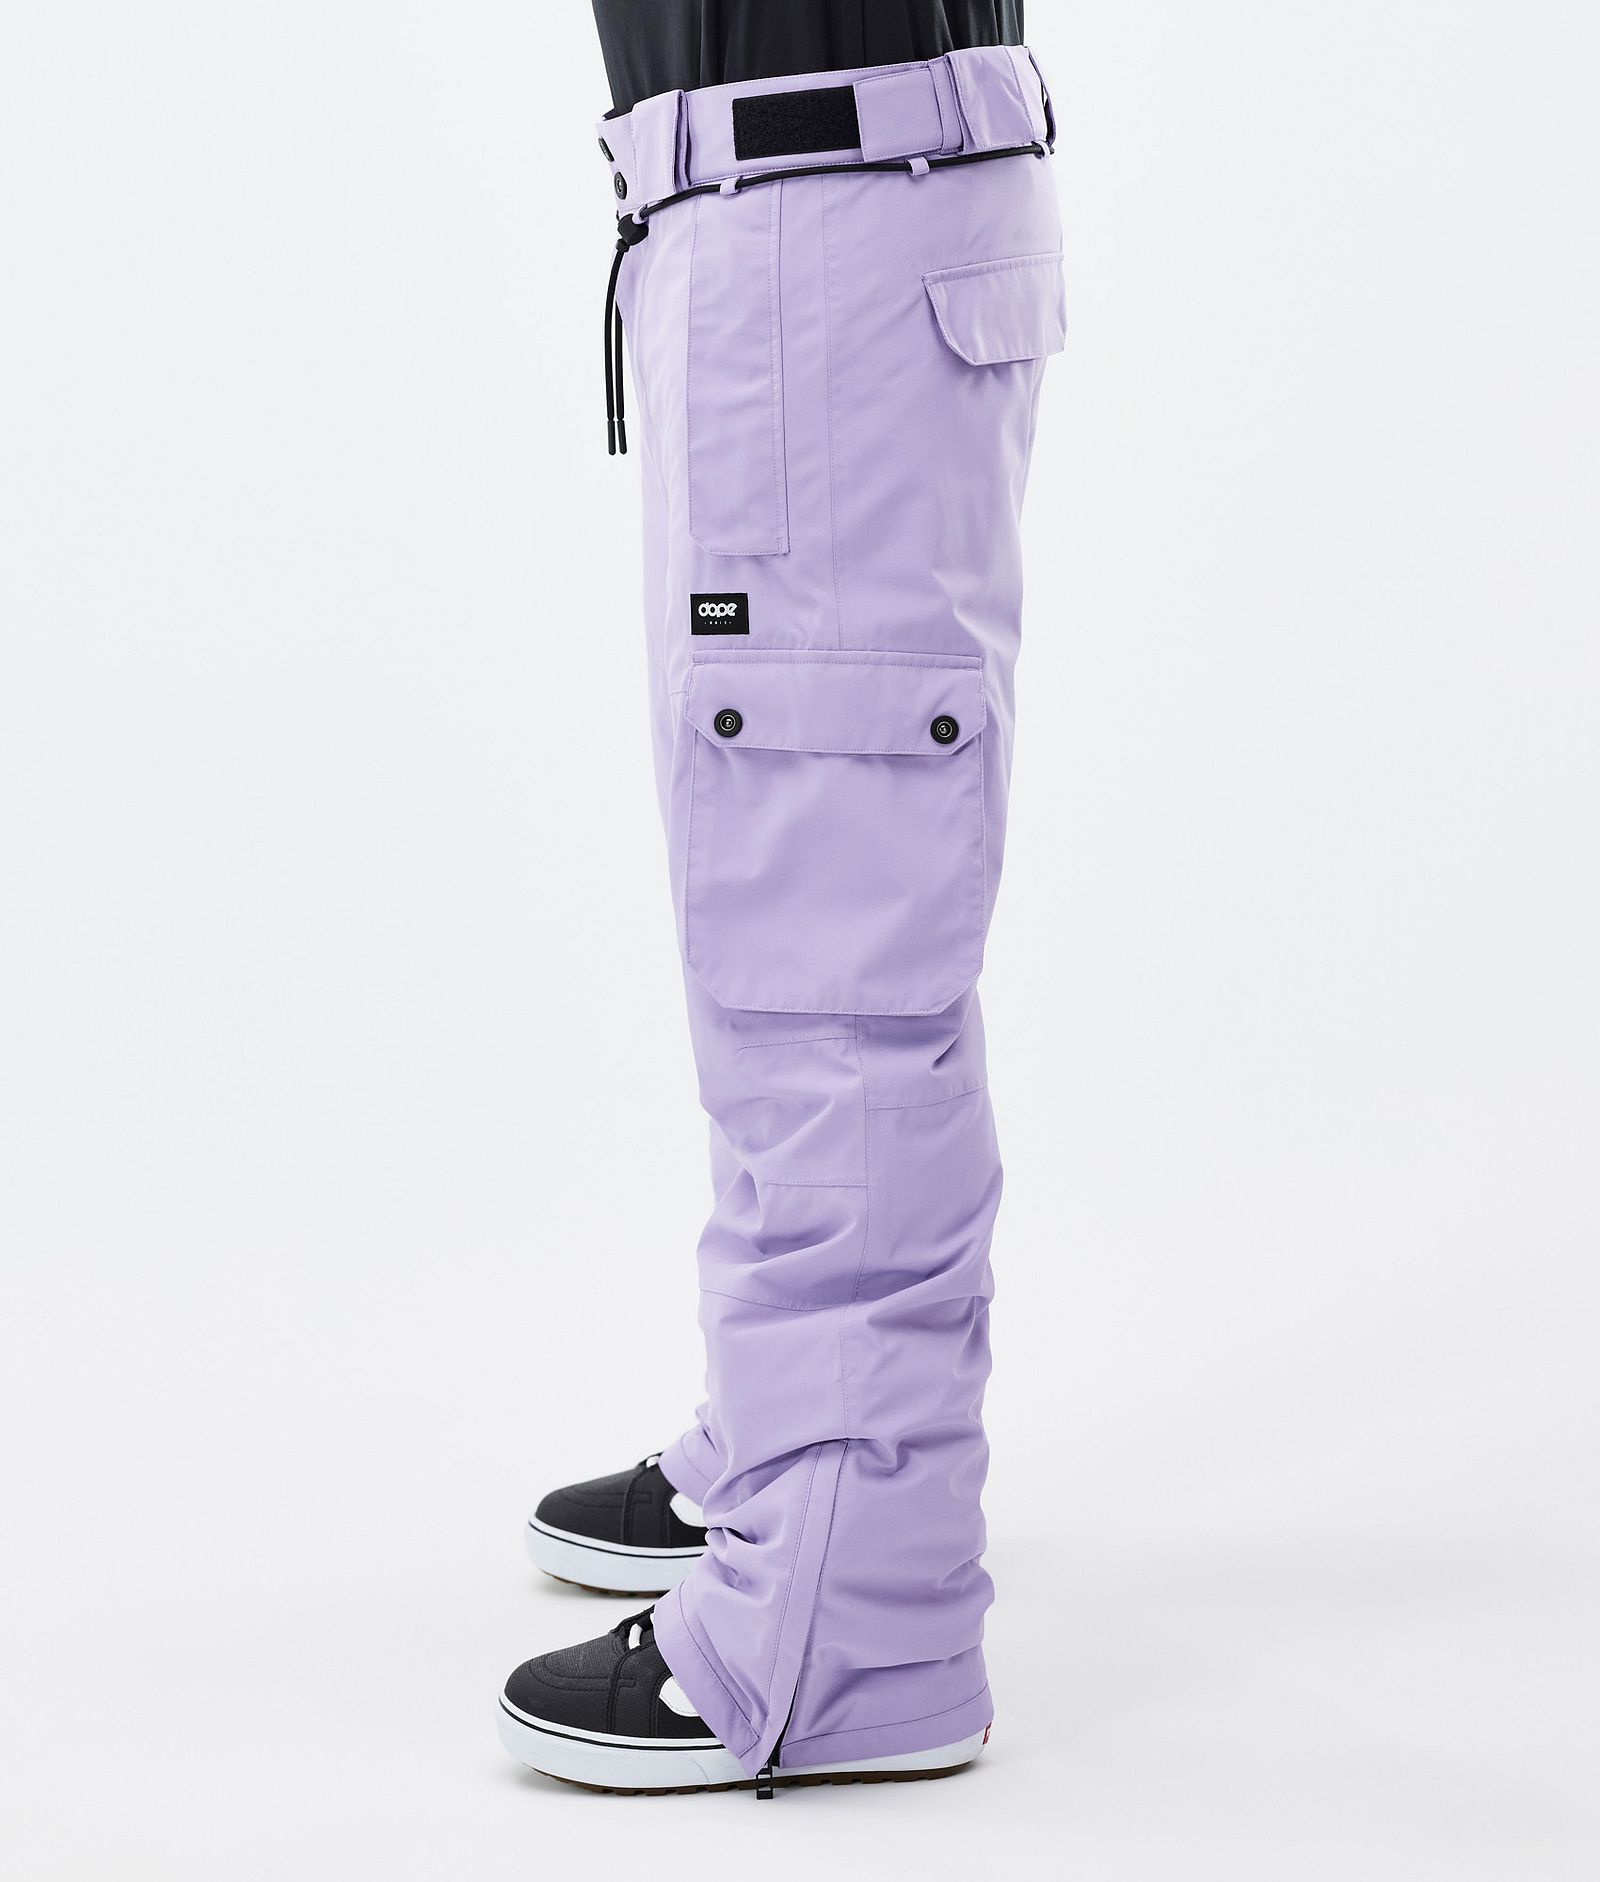 Dope Iconic Pantalon de Snowboard Homme Faded Violet Renewed, Image 3 sur 7